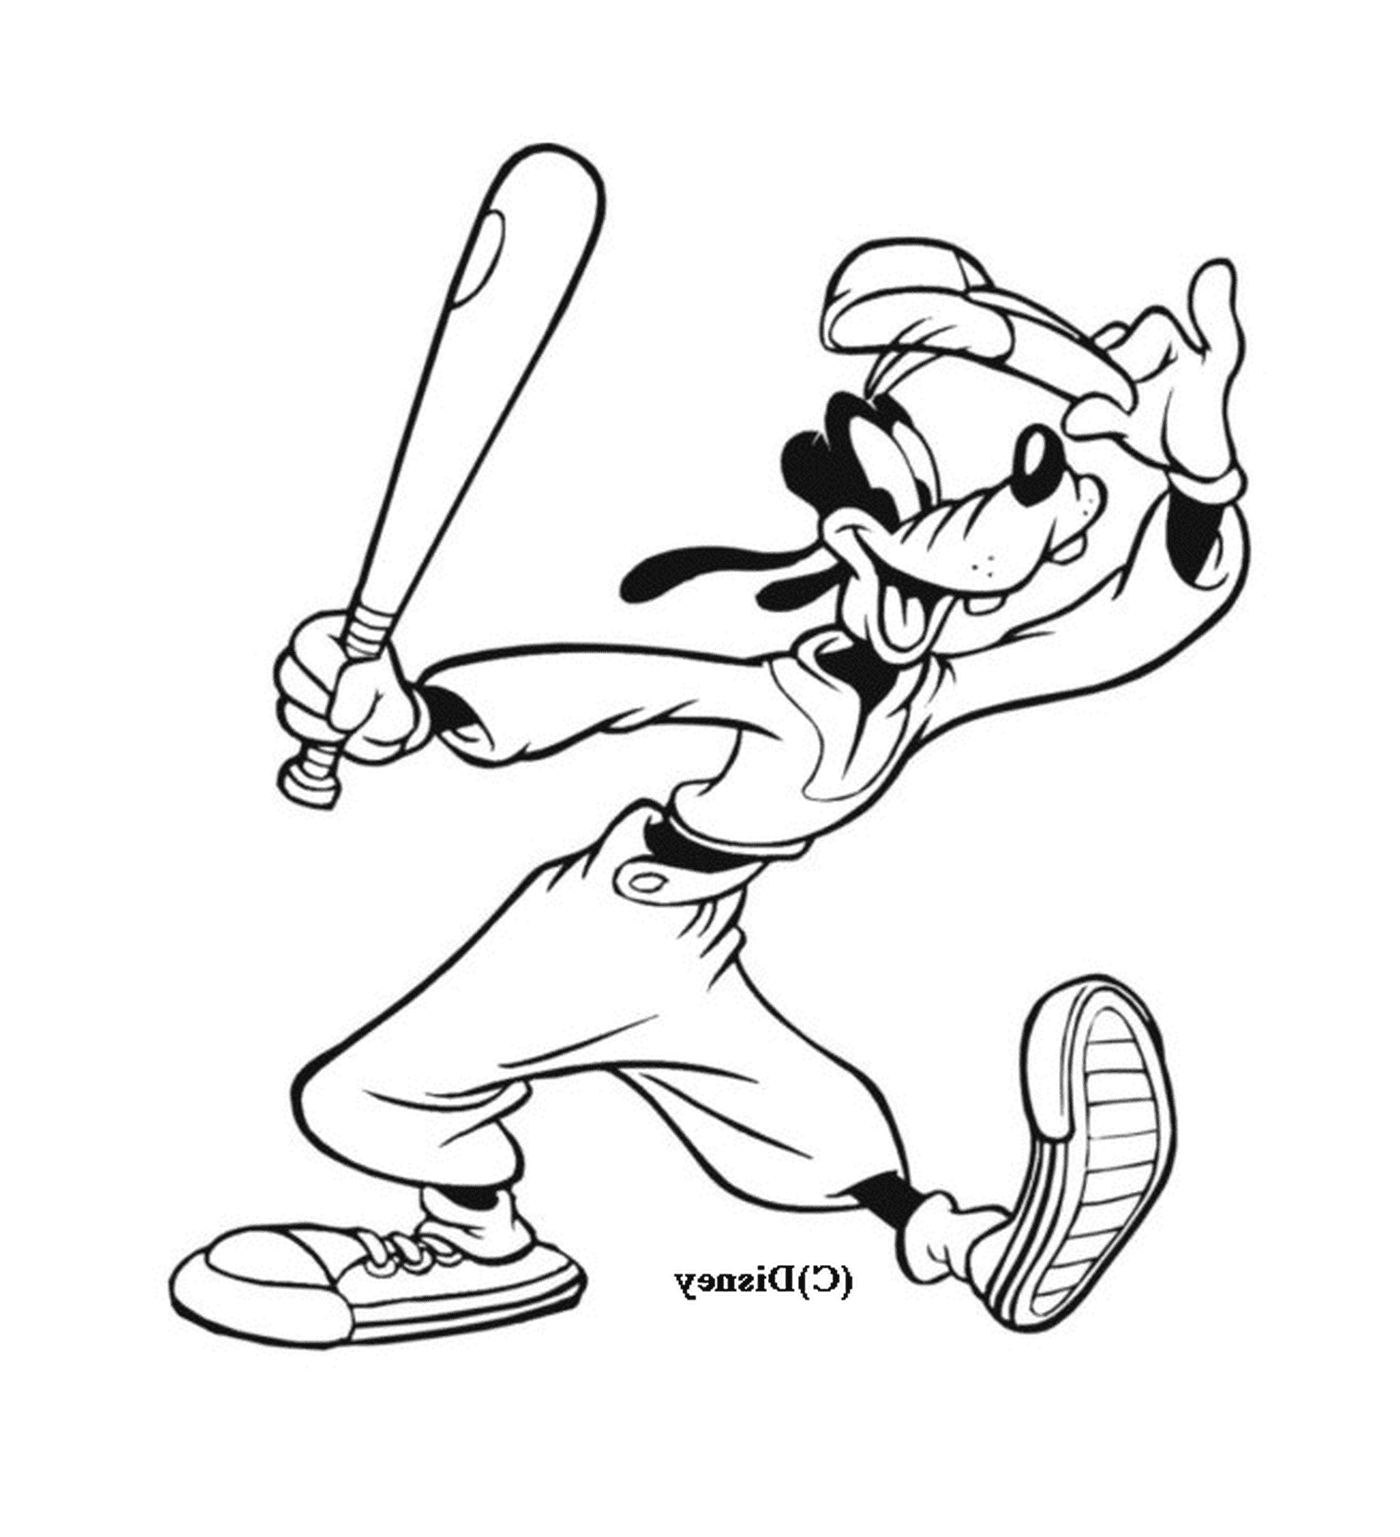  Dingo plays baseball with a bat 